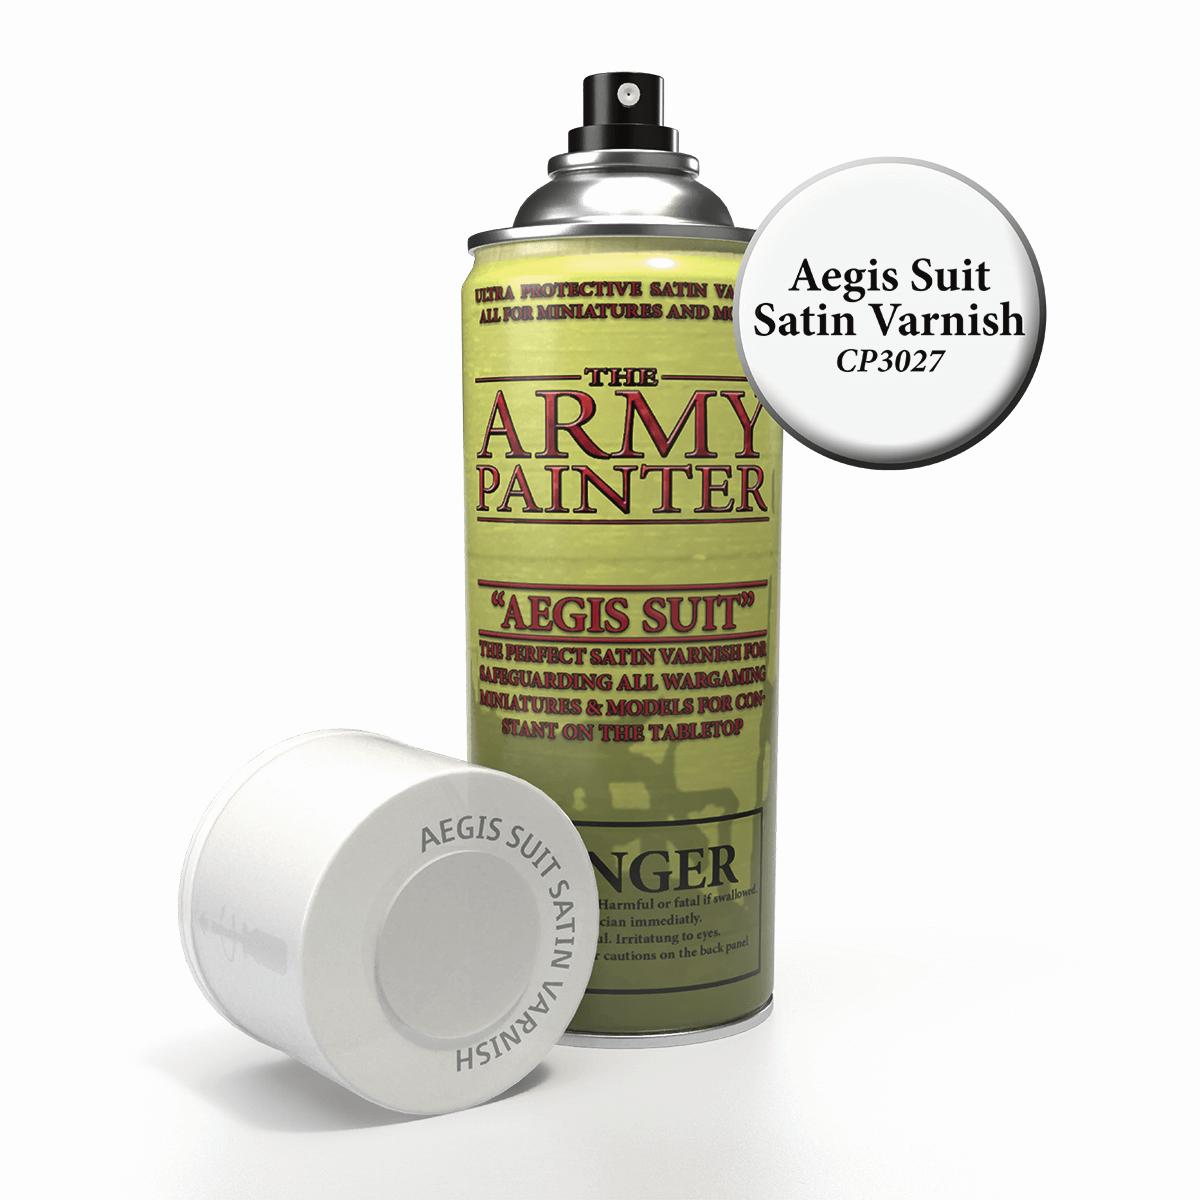 Aegis Suit Satin Varnish Spray Can